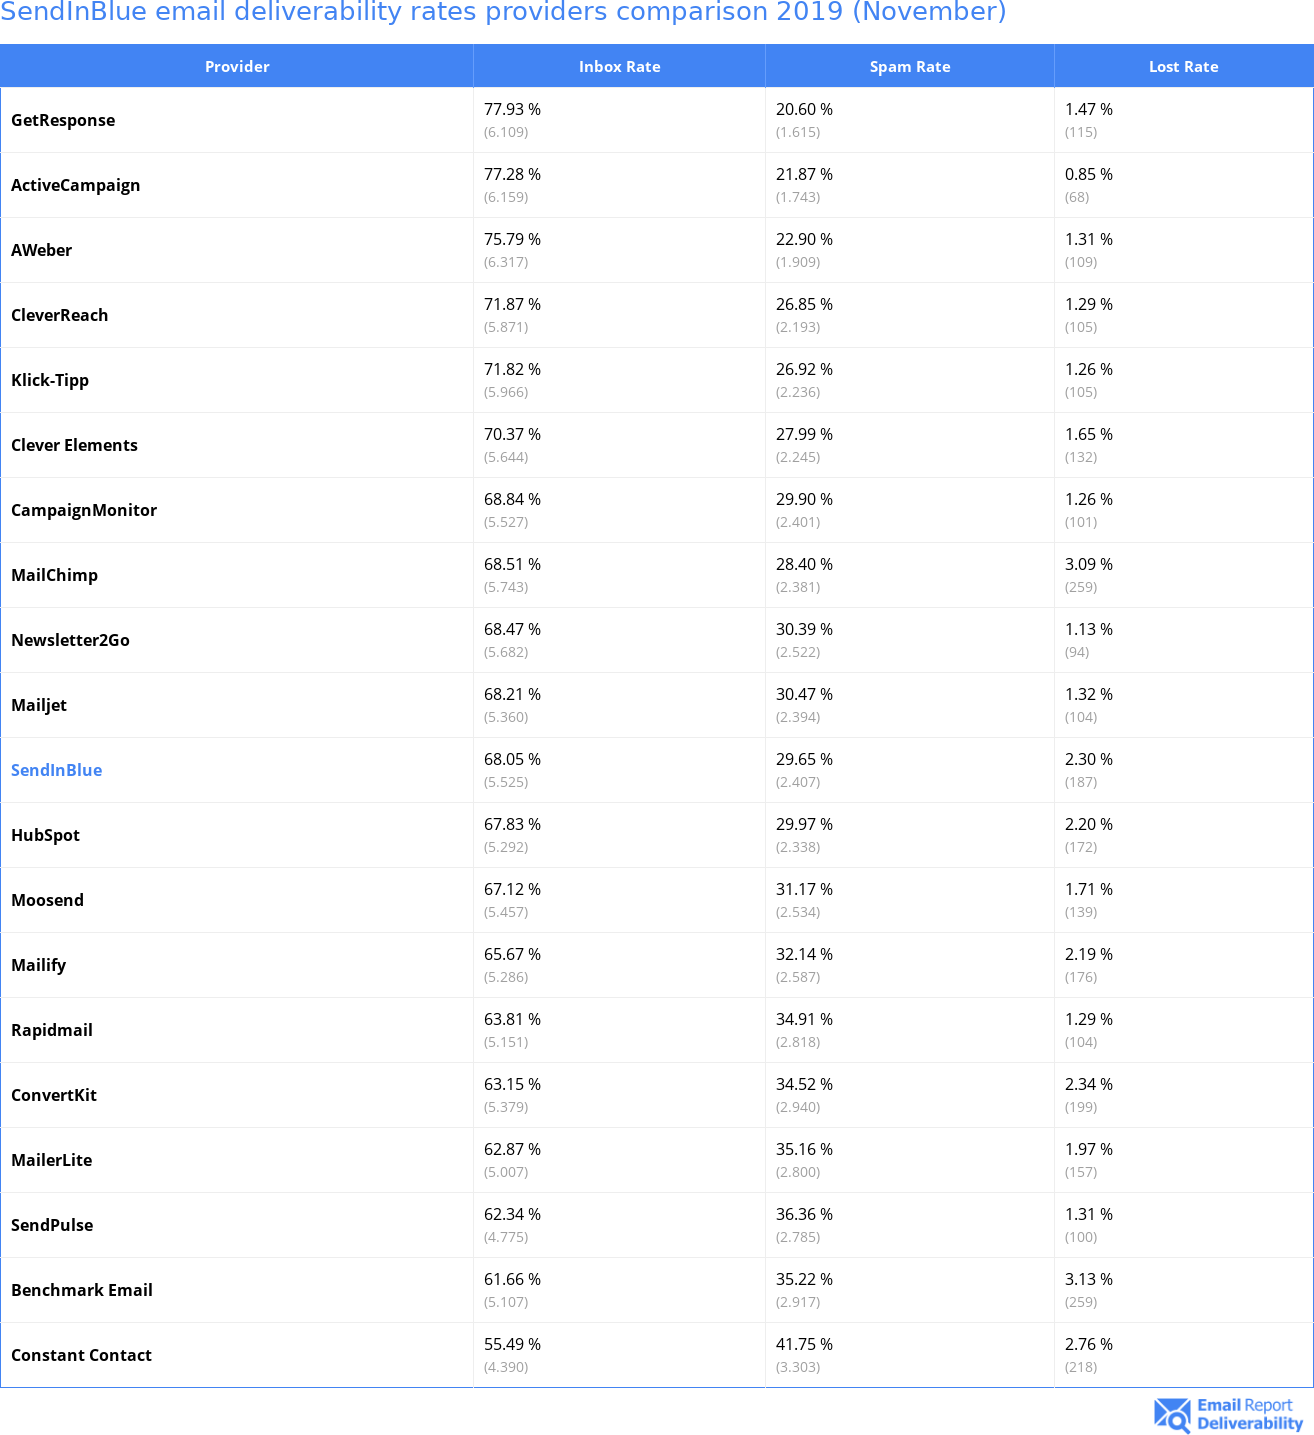 SendInBlue email deliverability rates providers comparison 2019 (November)